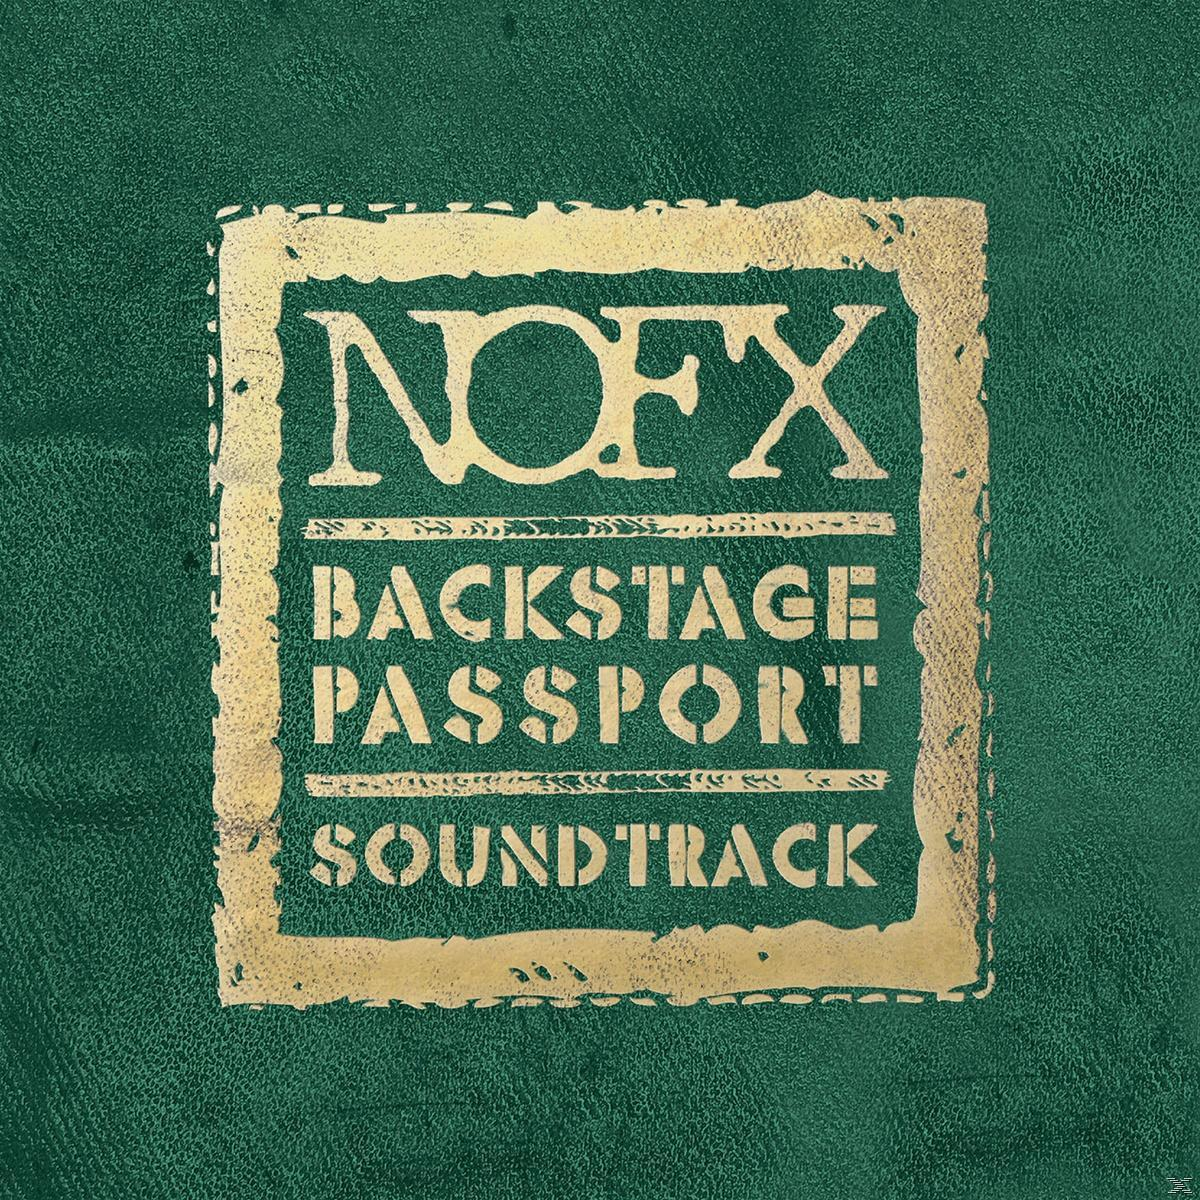 - Backstage Soundtrack + Download) (LP Passport - Nofx -